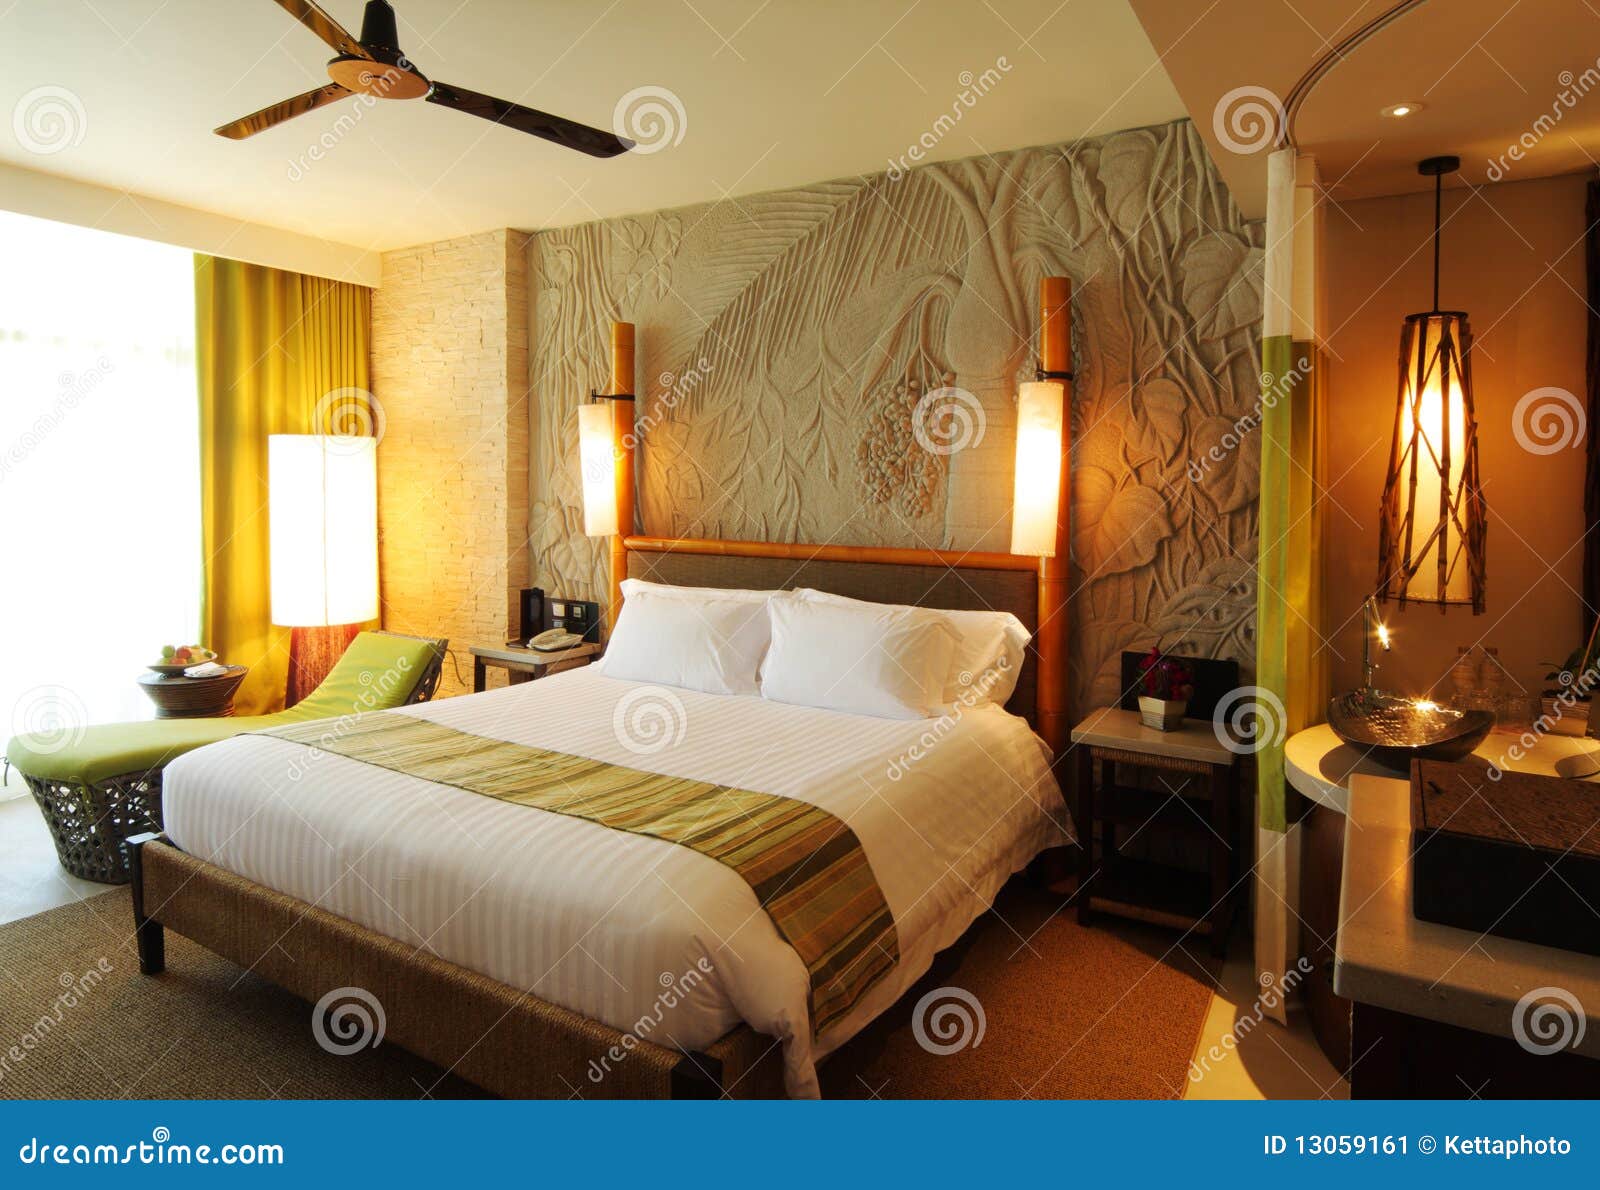 nice hotel-room